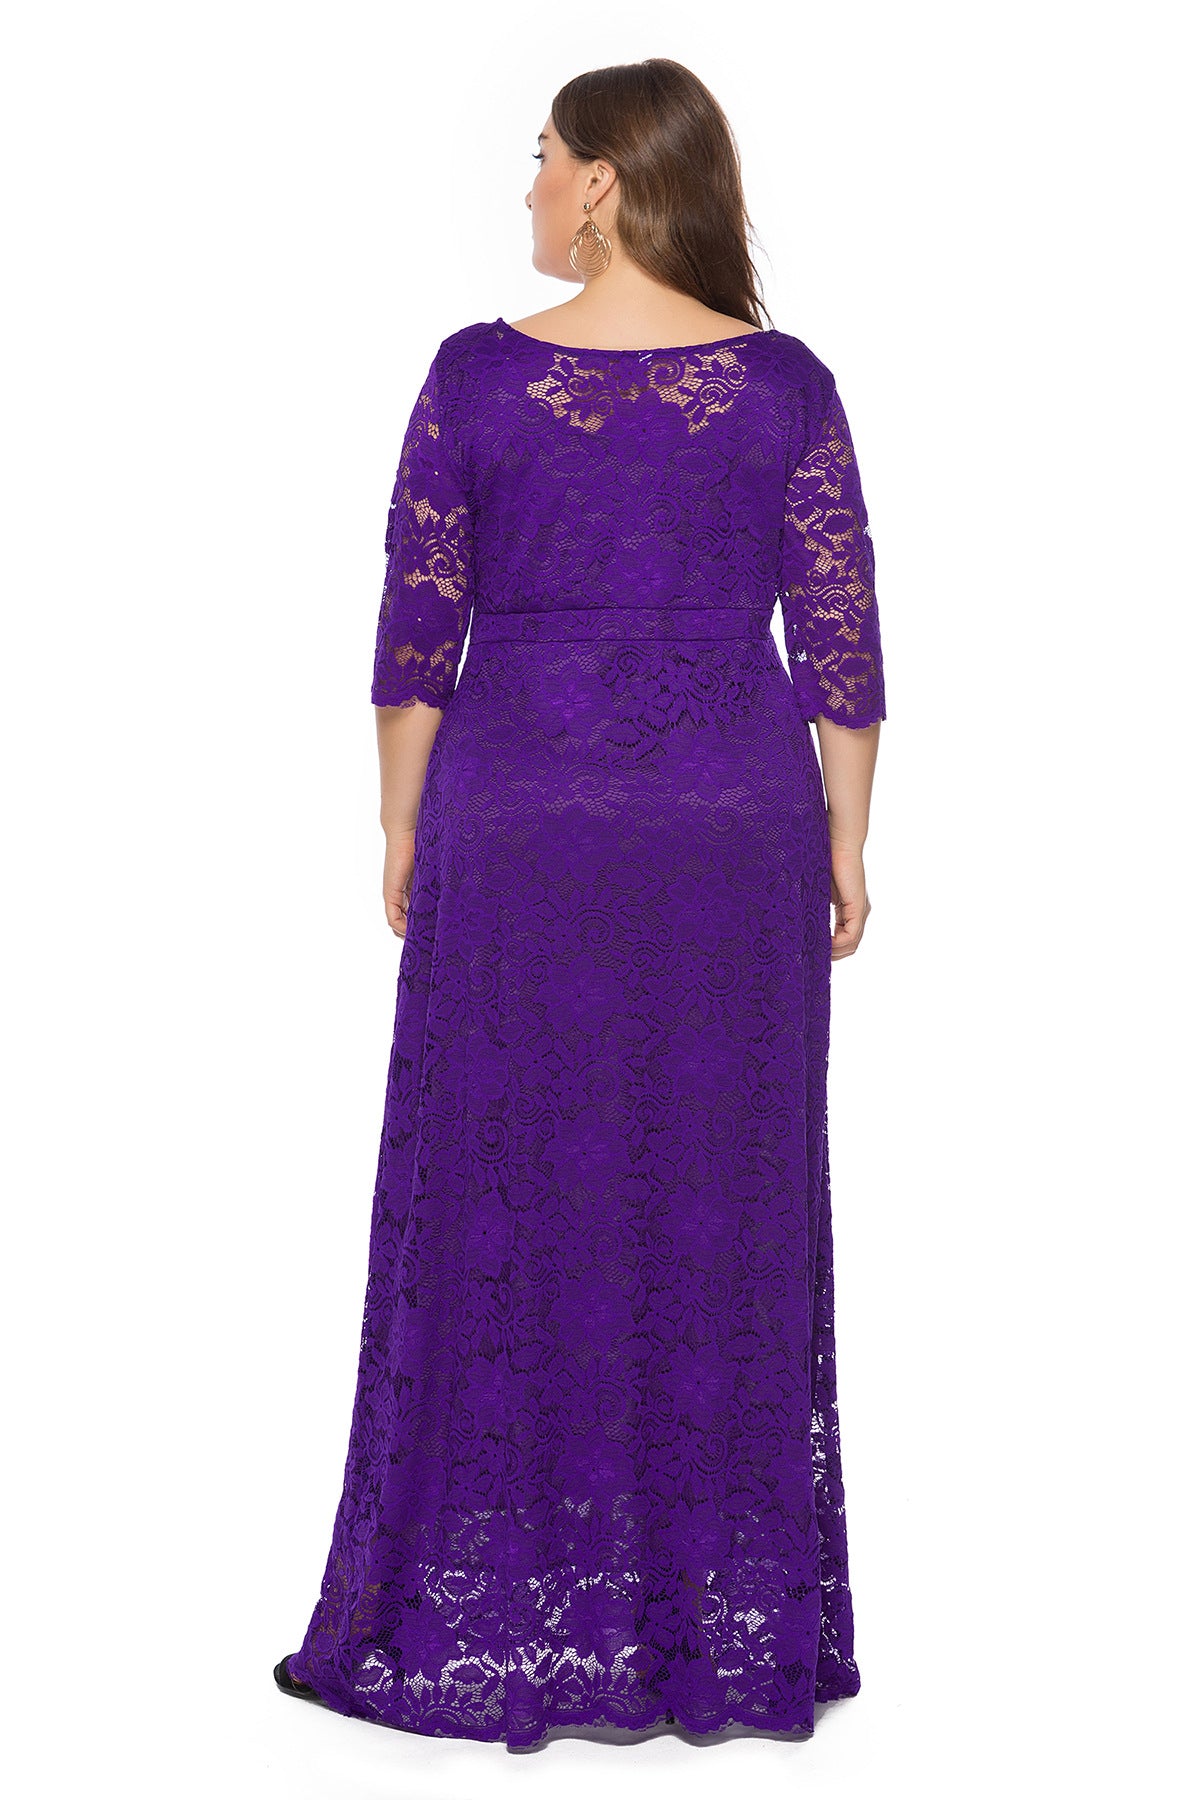 Plus Size Women New Hollow Lace Pocket Dress  dresses Thecurvestory